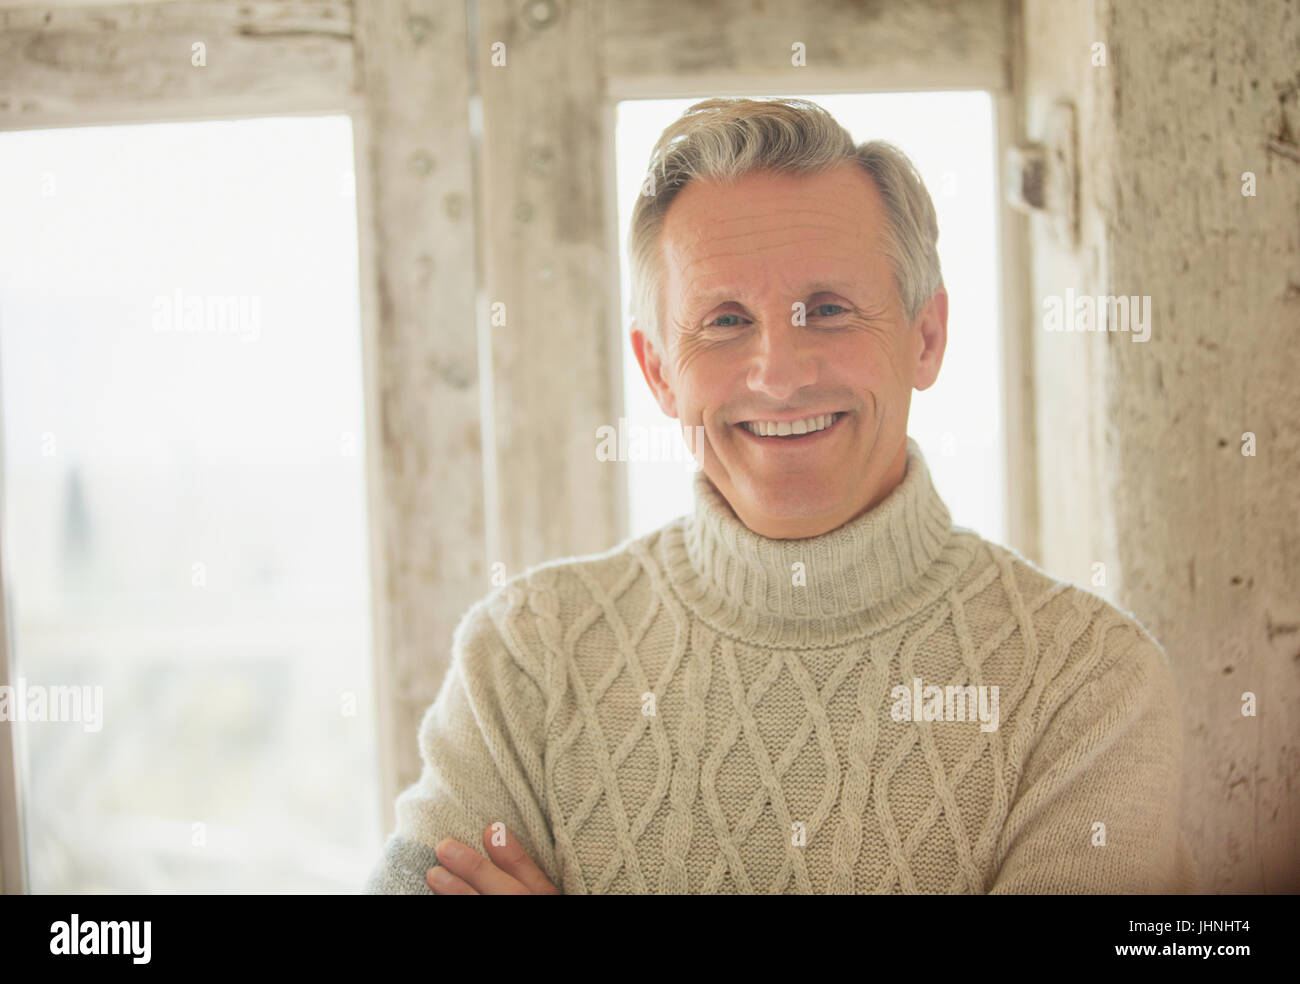 Portrait smiling senior man in turtleneck sweater Stock Photo